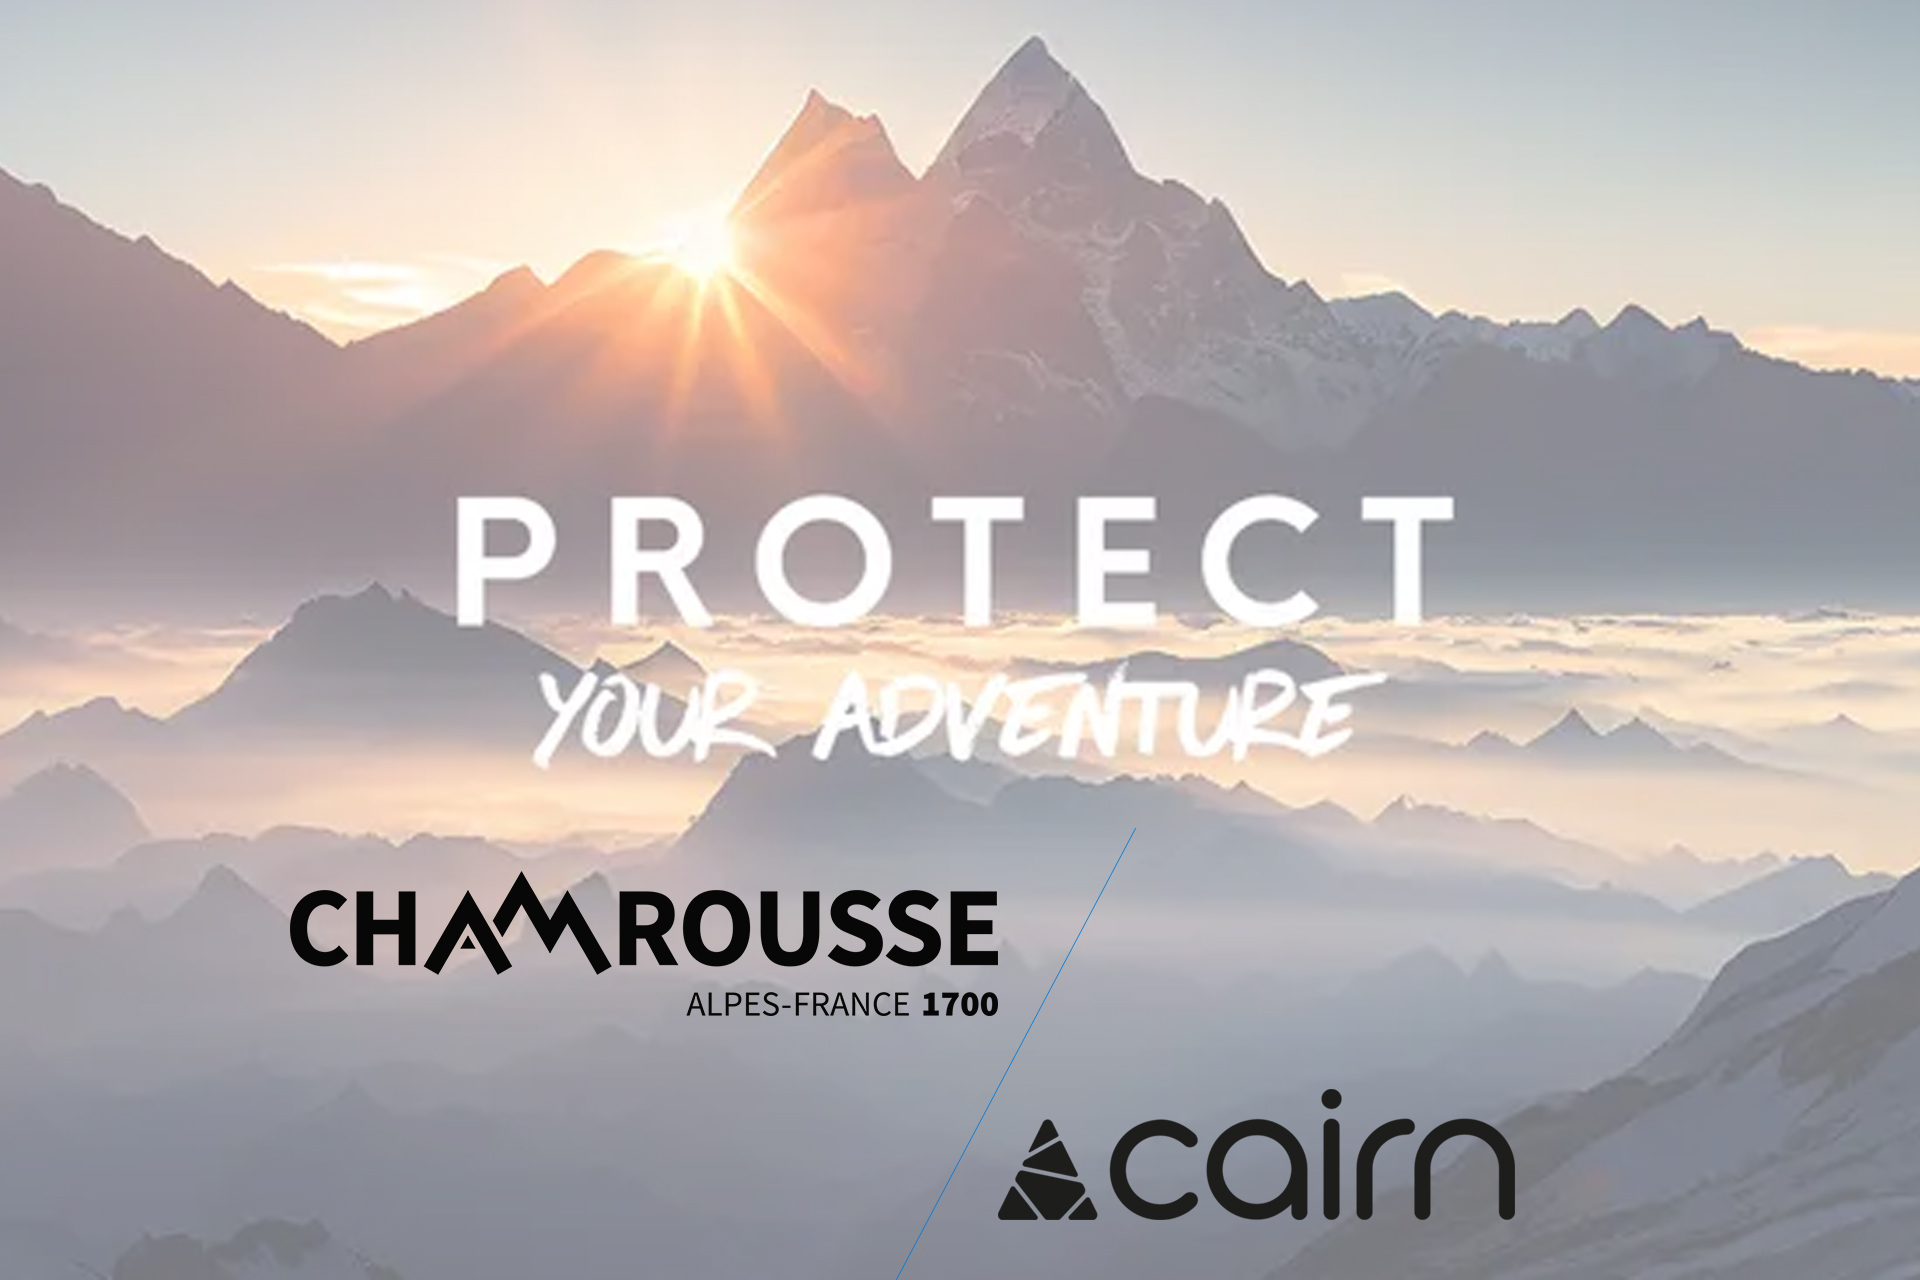 Chamrousse partner Cairn sport outdoor specialist partnership mountain ski resort grenoble isere french alps france - © Cairn